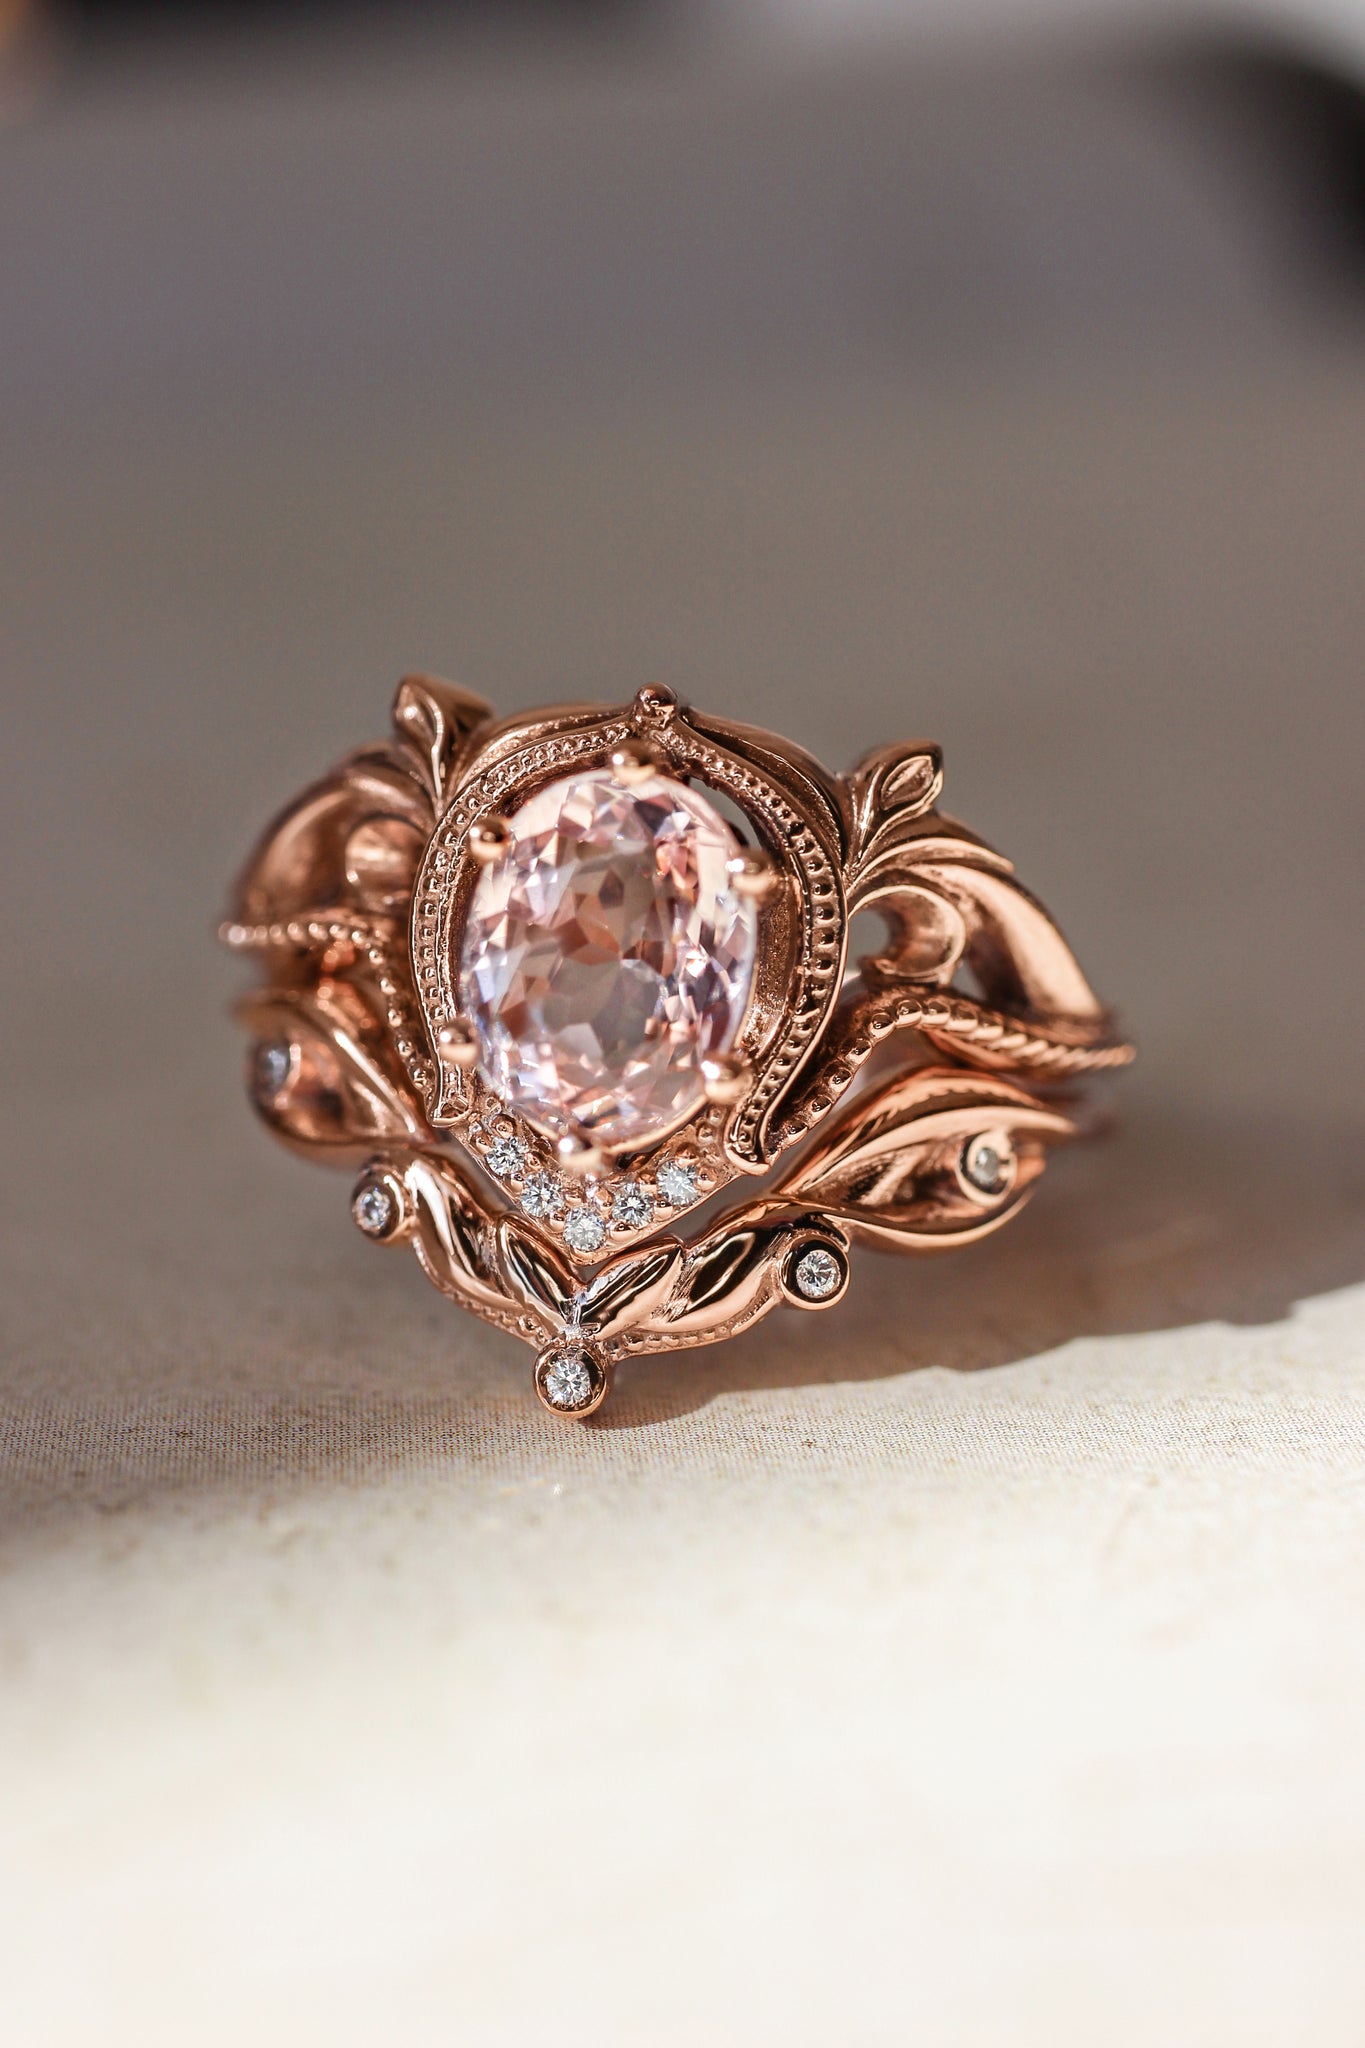 Art nouveau bridal ring set with morganite / Lida oval - Eden Garden Jewelry™